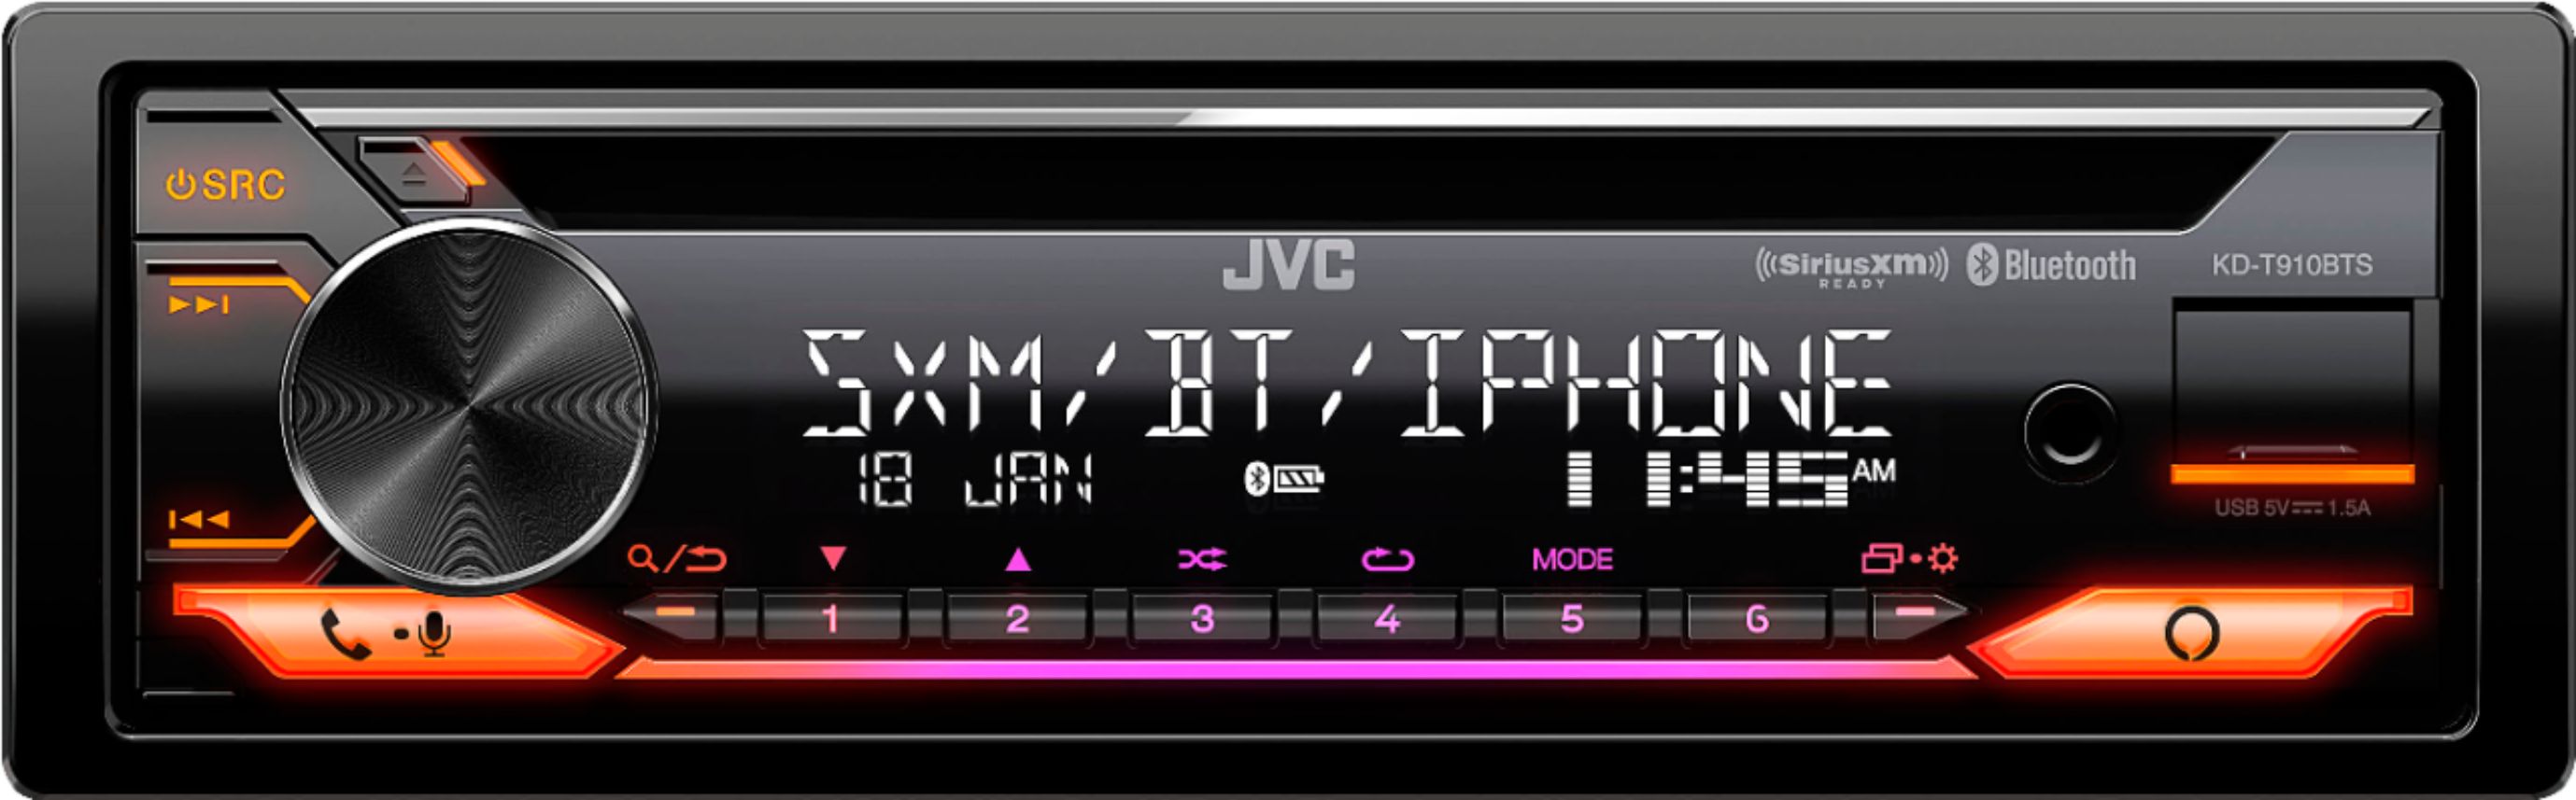 JVC In-Dash CD/DM Receiver Built-in Bluetooth Satellite Radio-ready with  Detachable Faceplate Black KD-T910BTS - Best Buy